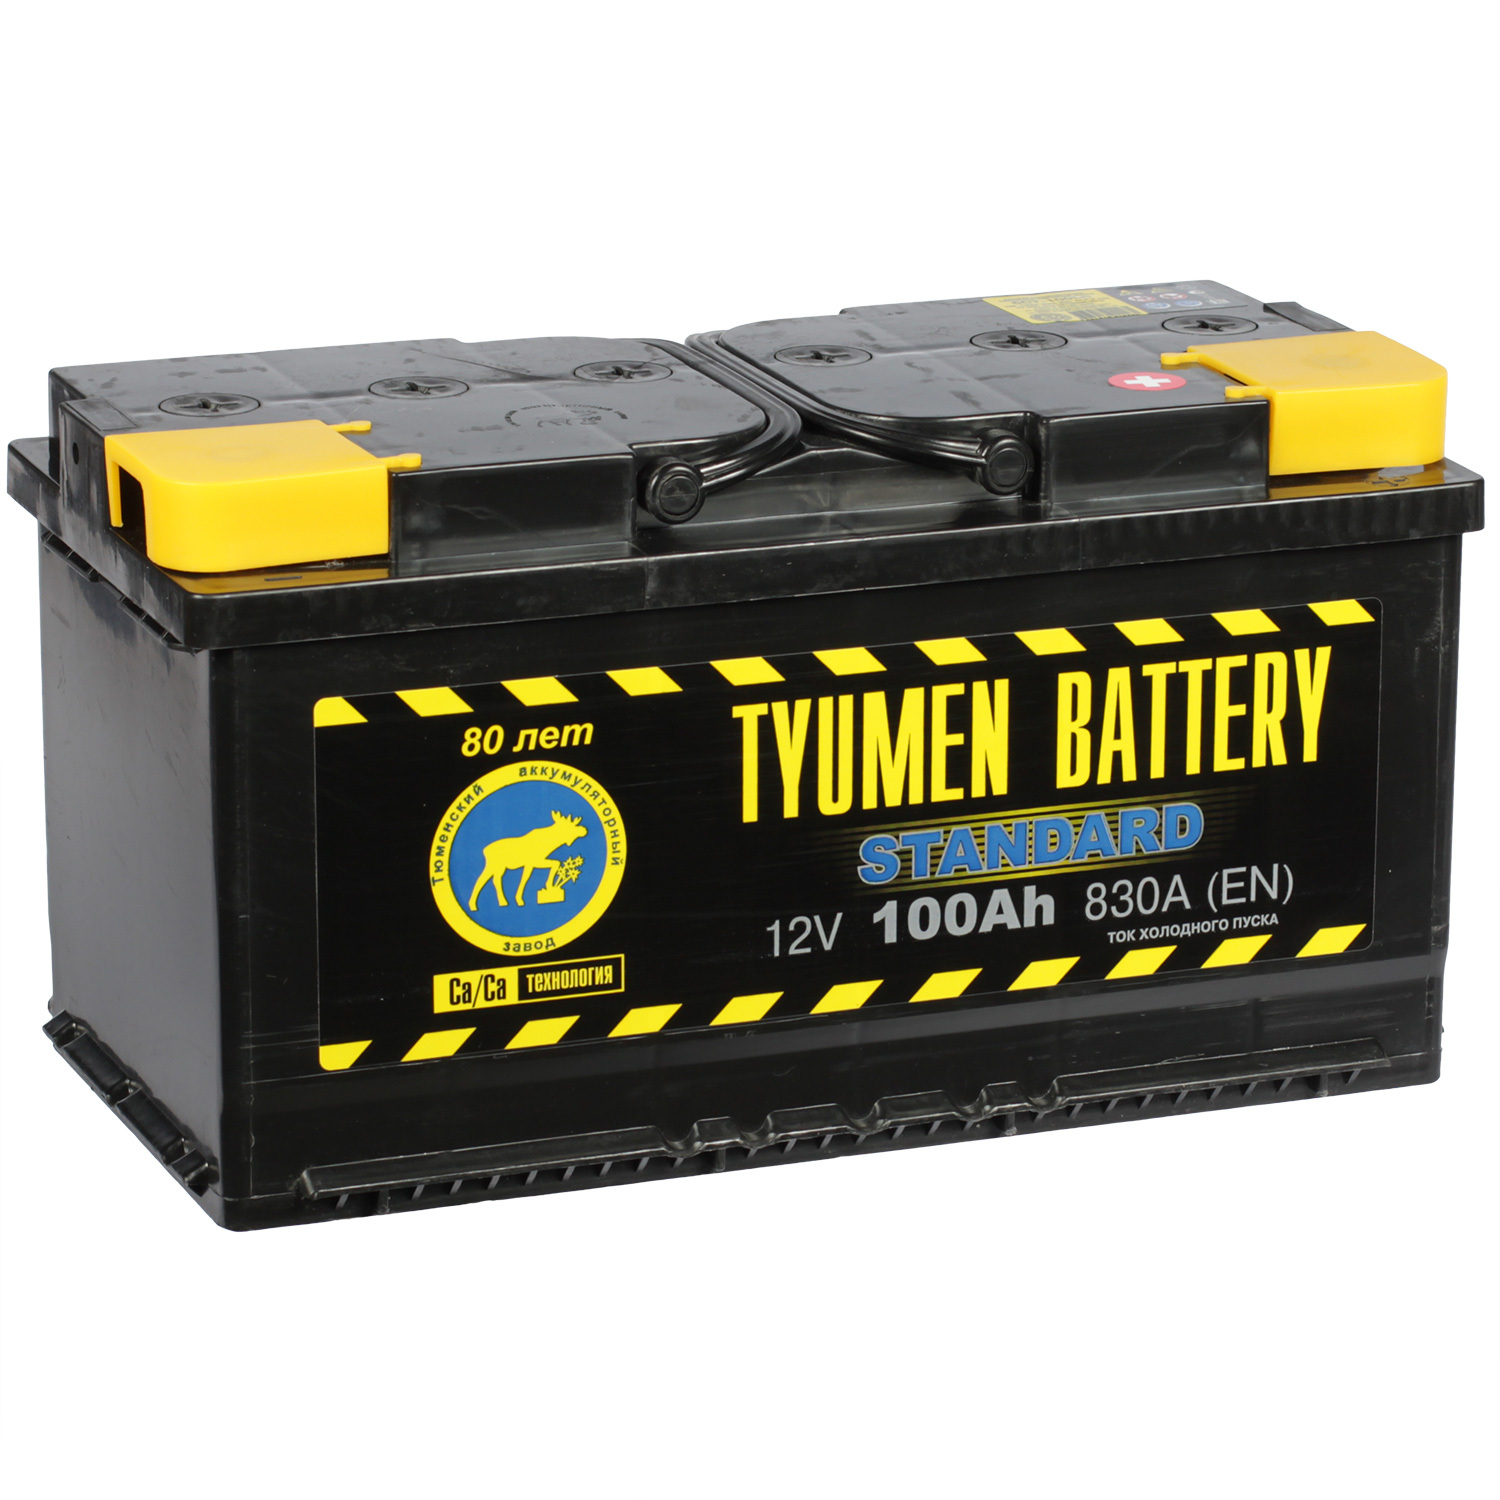 Tyumen Battery Автомобильный аккумулятор Tyumen Battery Standard 100 Ач обратная полярность L5 tyumen battery автомобильный аккумулятор tyumen battery premium 50 ач обратная полярность l1